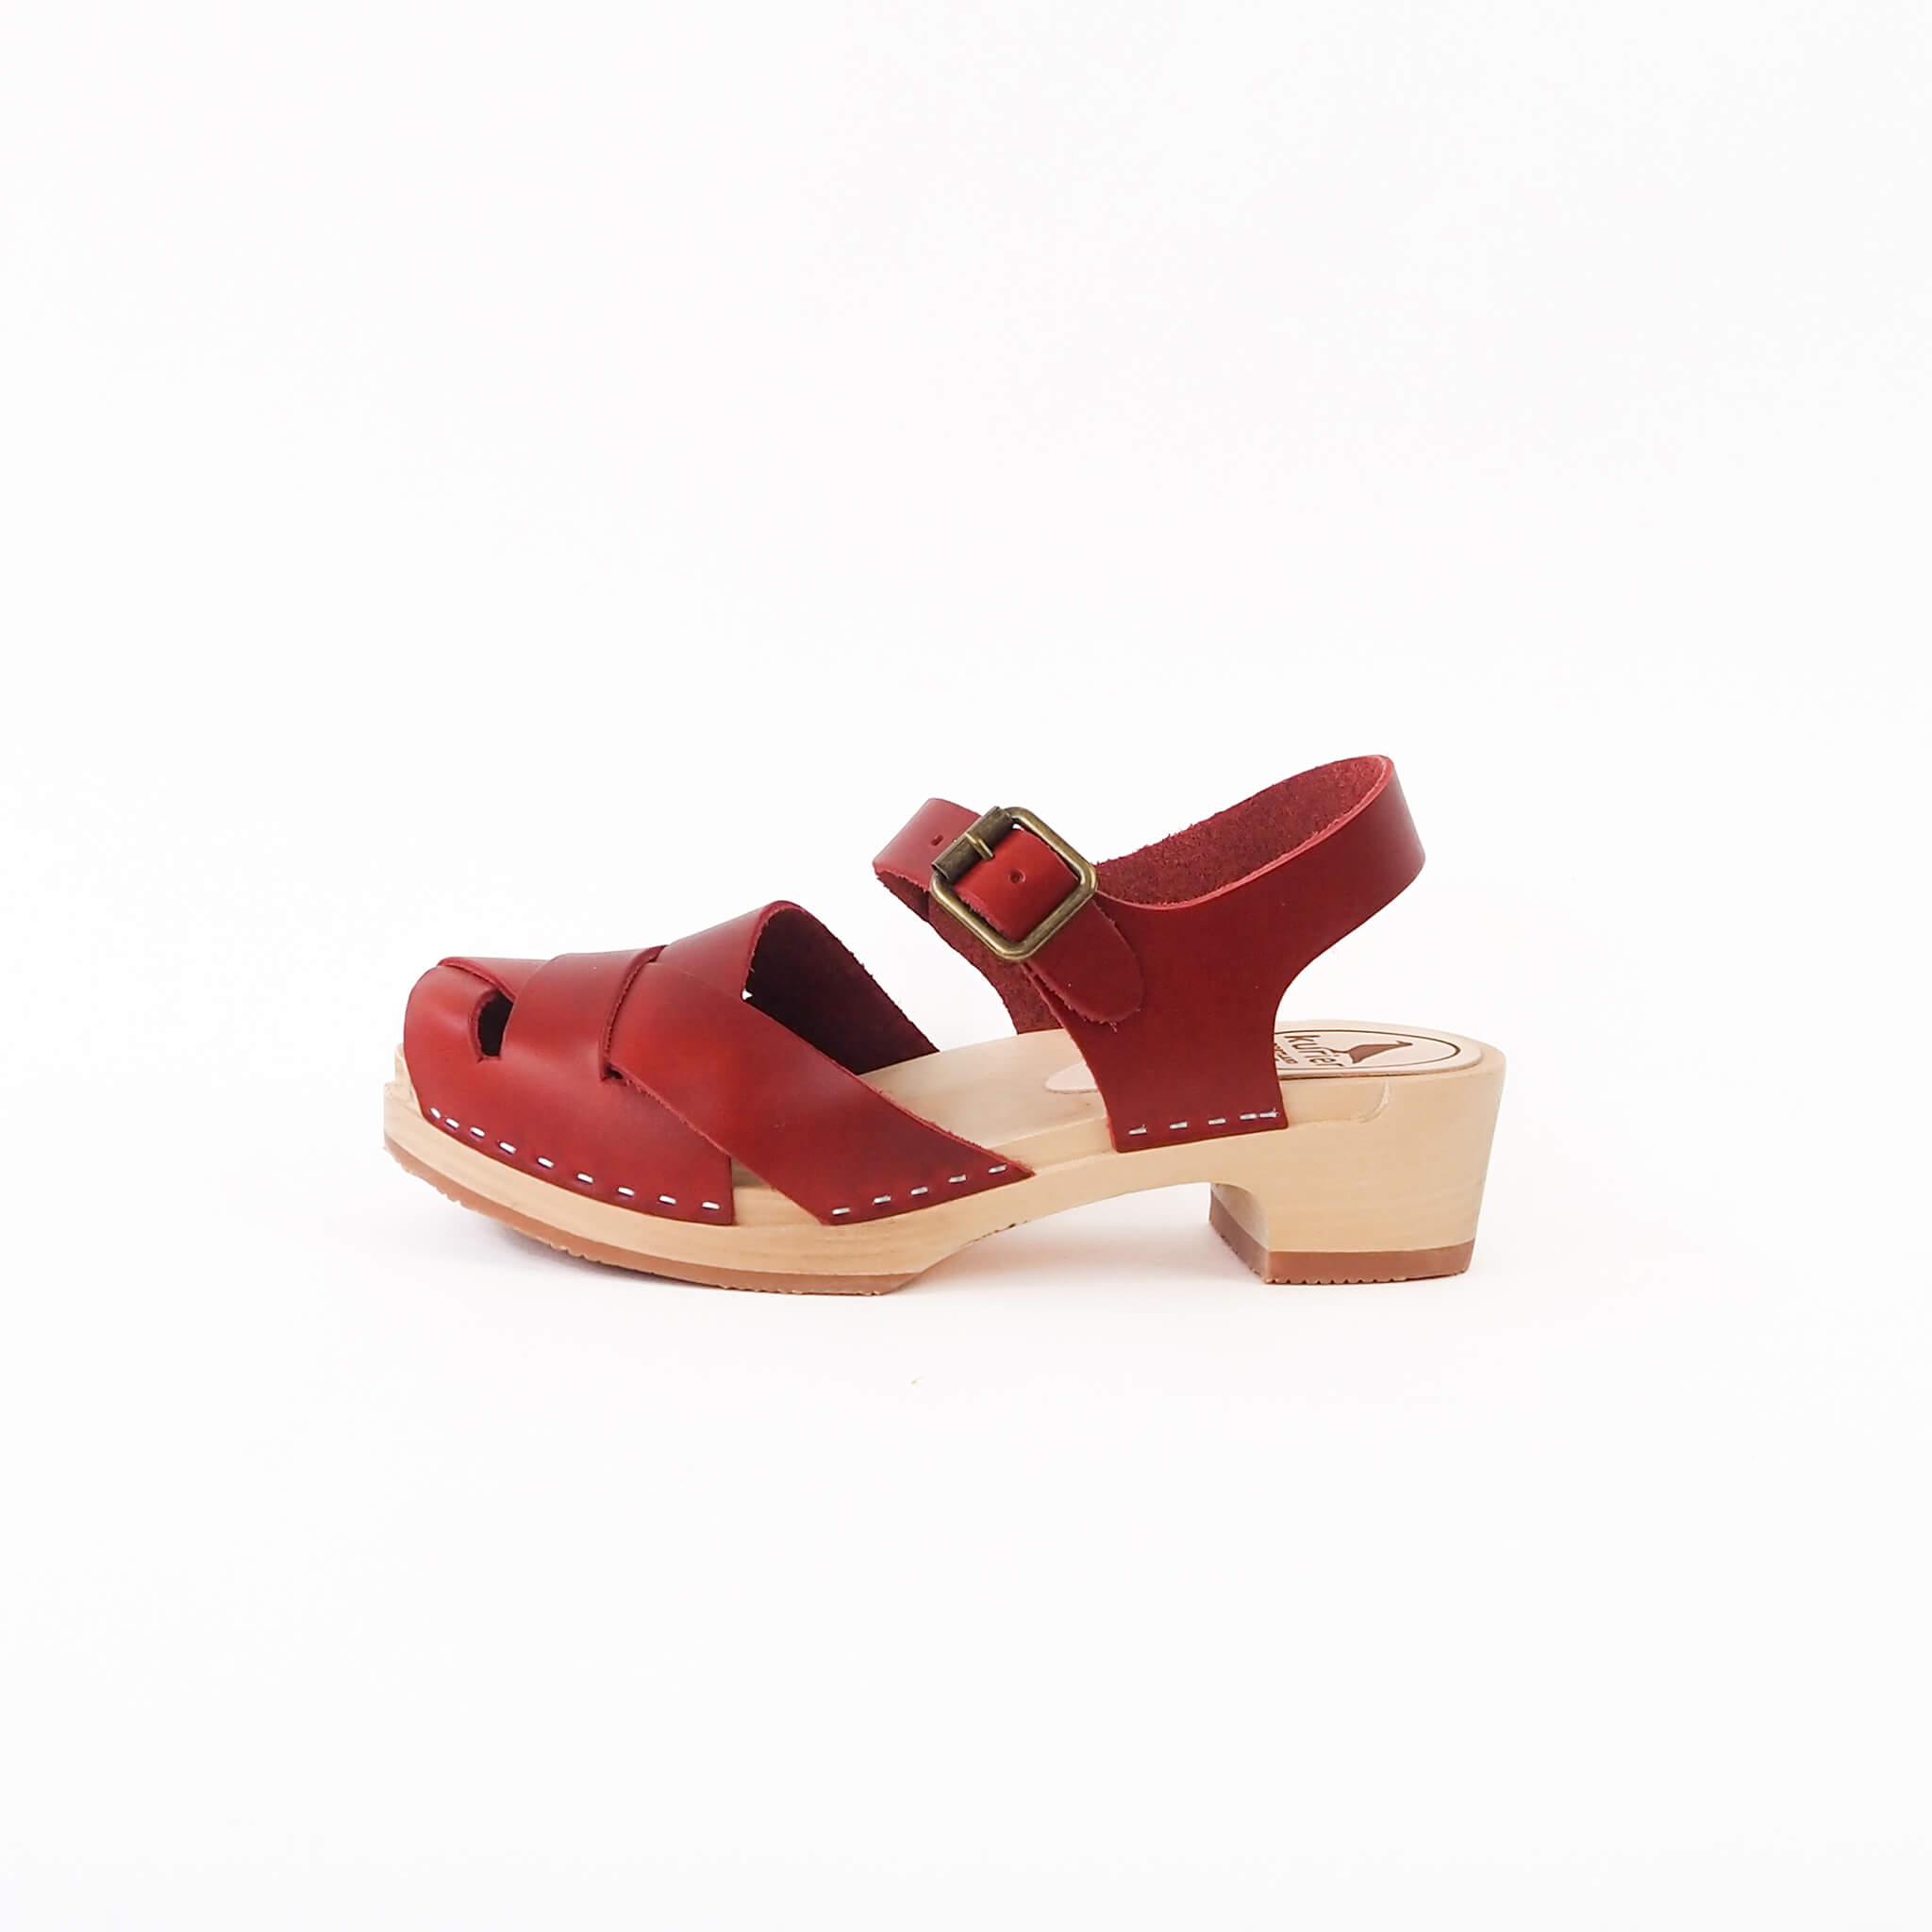 emelia clog low heel peep toe mary janesandal handmade american leather wood - cherry side view